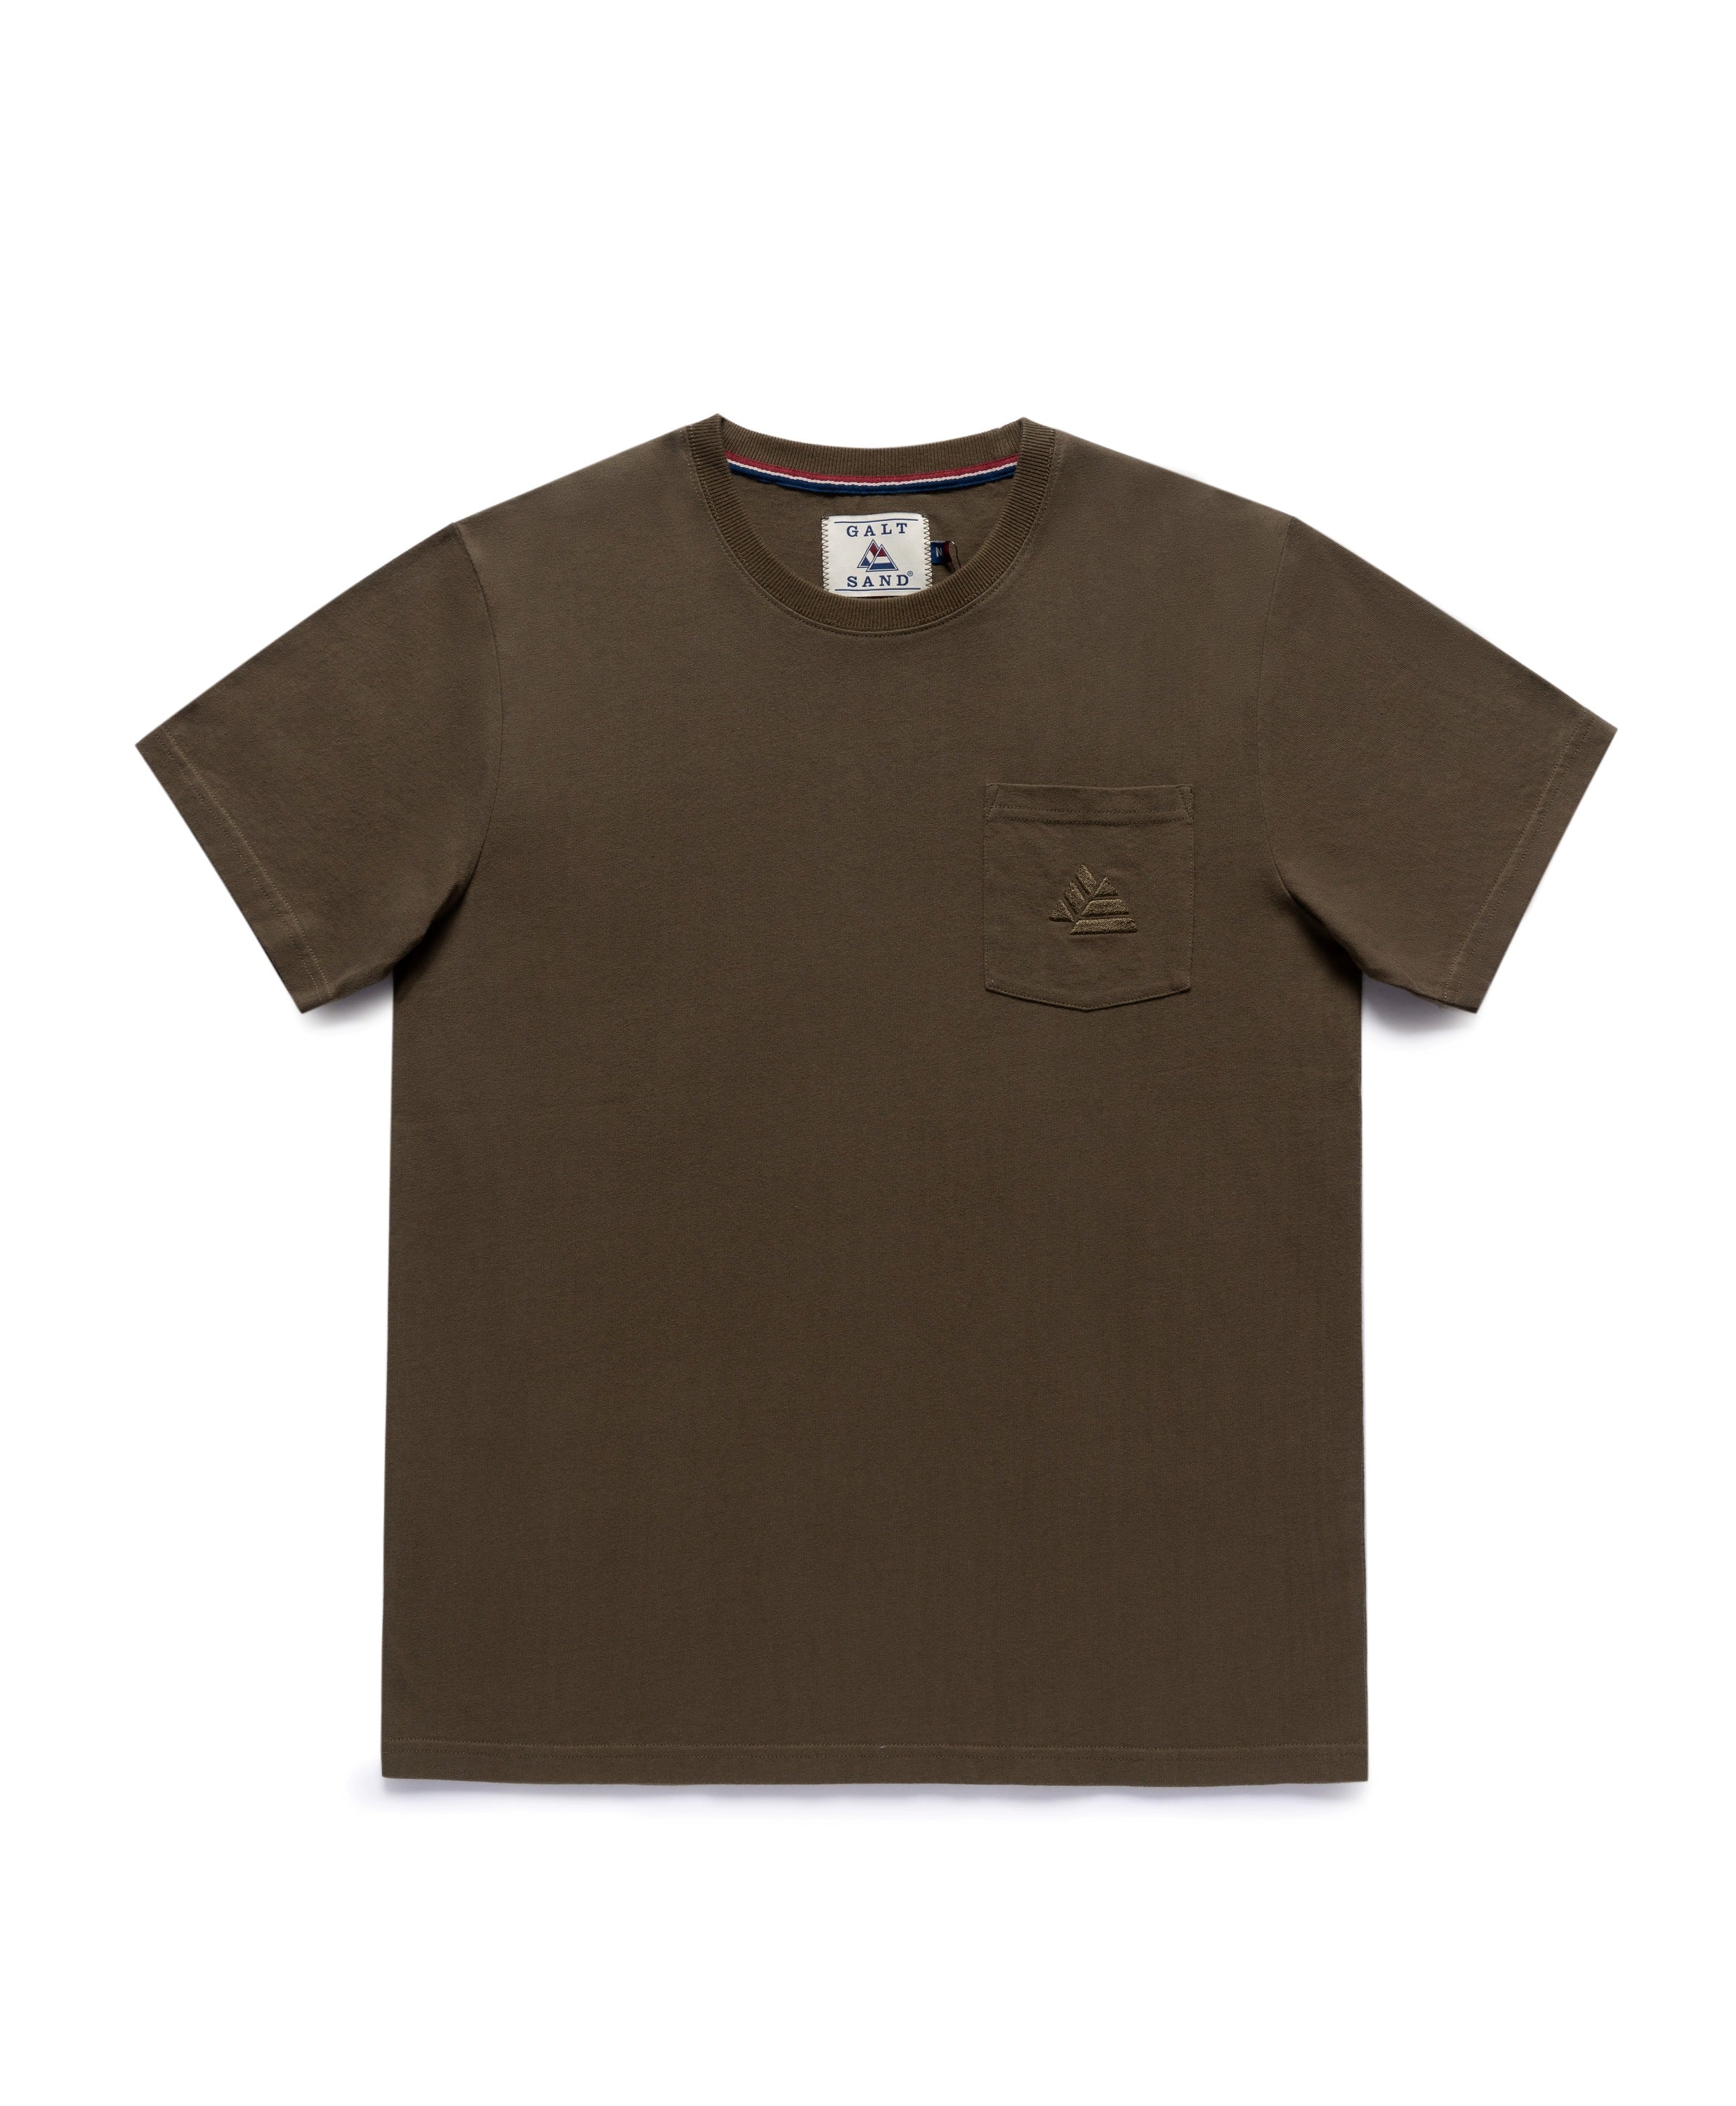 Thermolactyl short sleeve t-shirt, grade 2 sand Damart